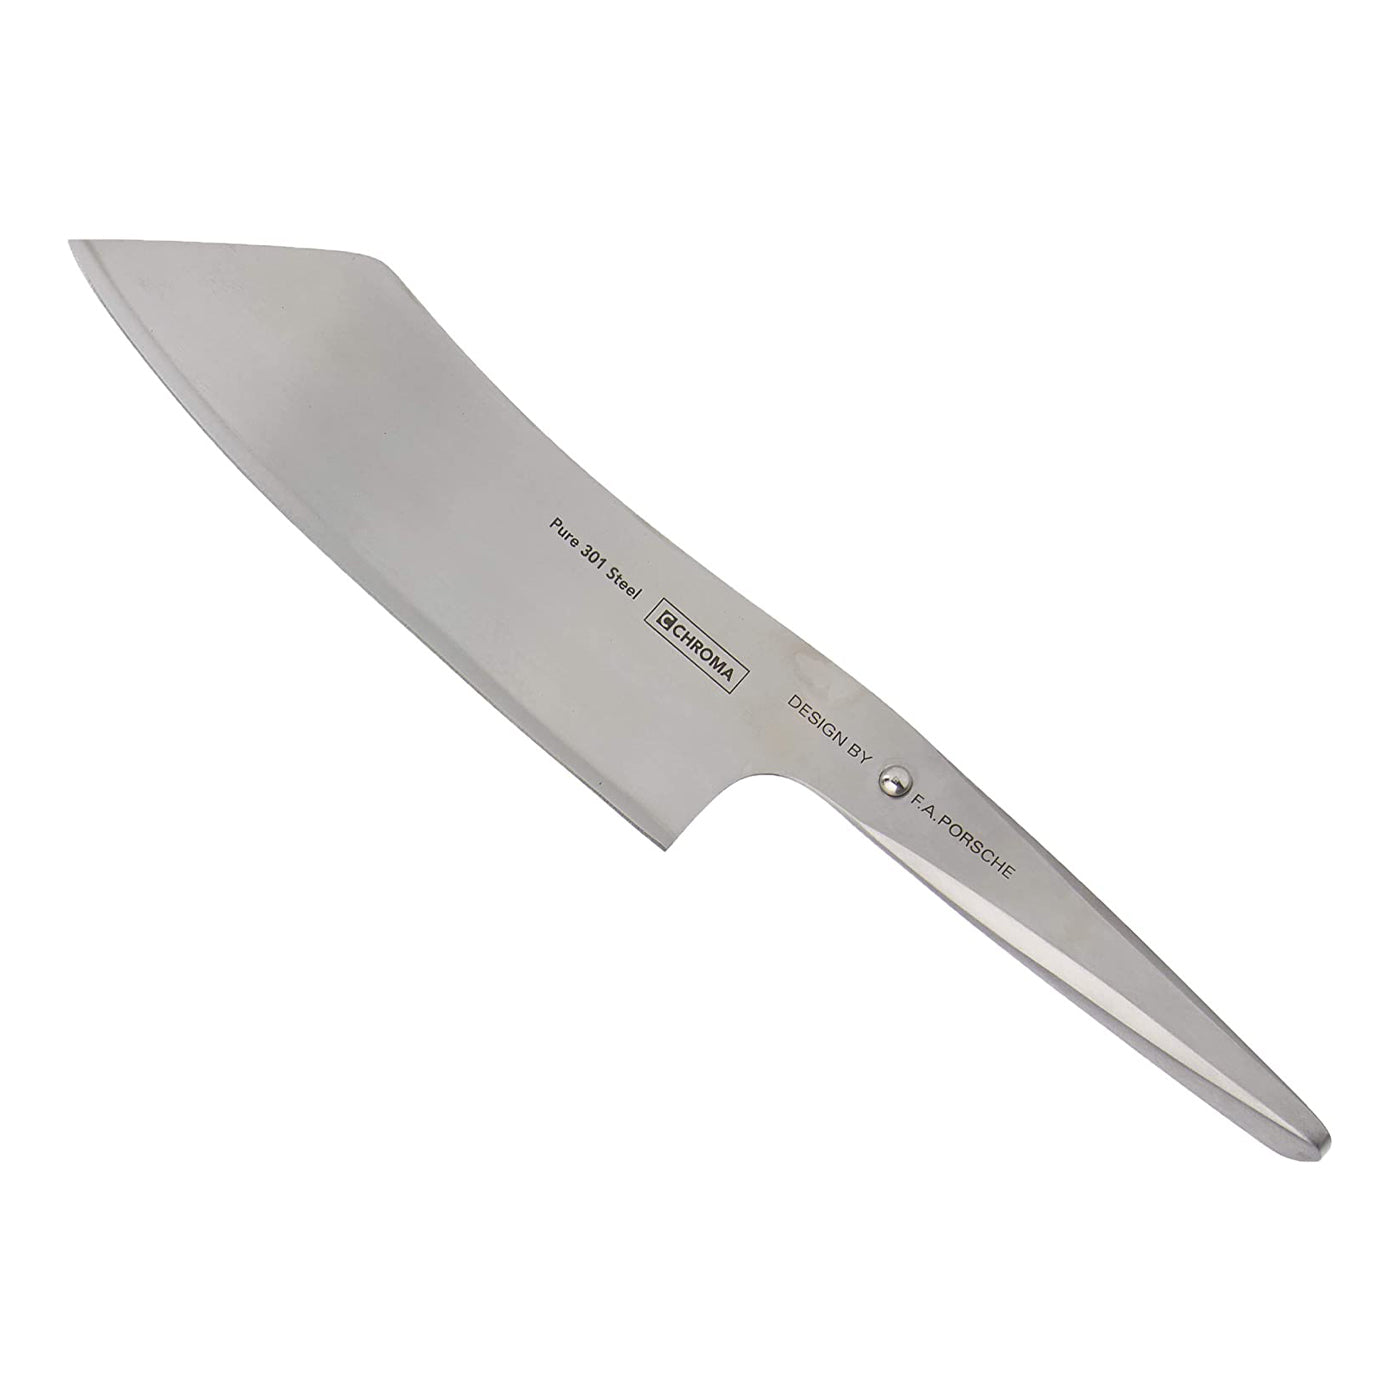 Chroma type 301: 6 3/4" Hakata Santoku Knife